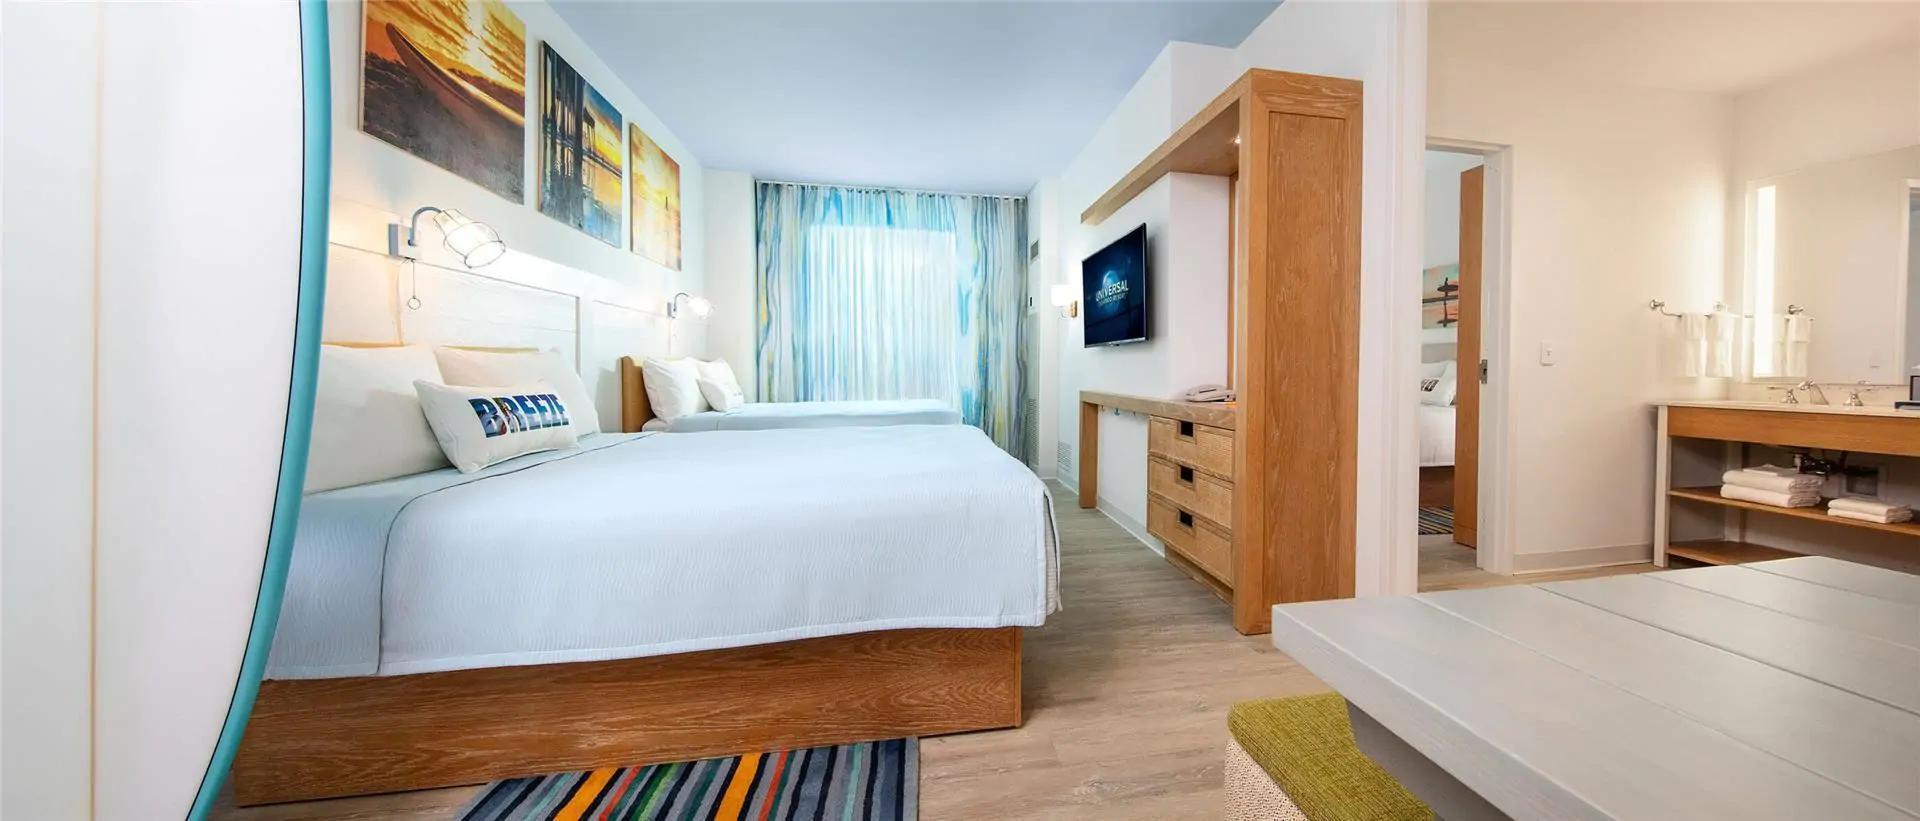 Endless Summer Resort - Dockside Inn Suites 2-bedroom room